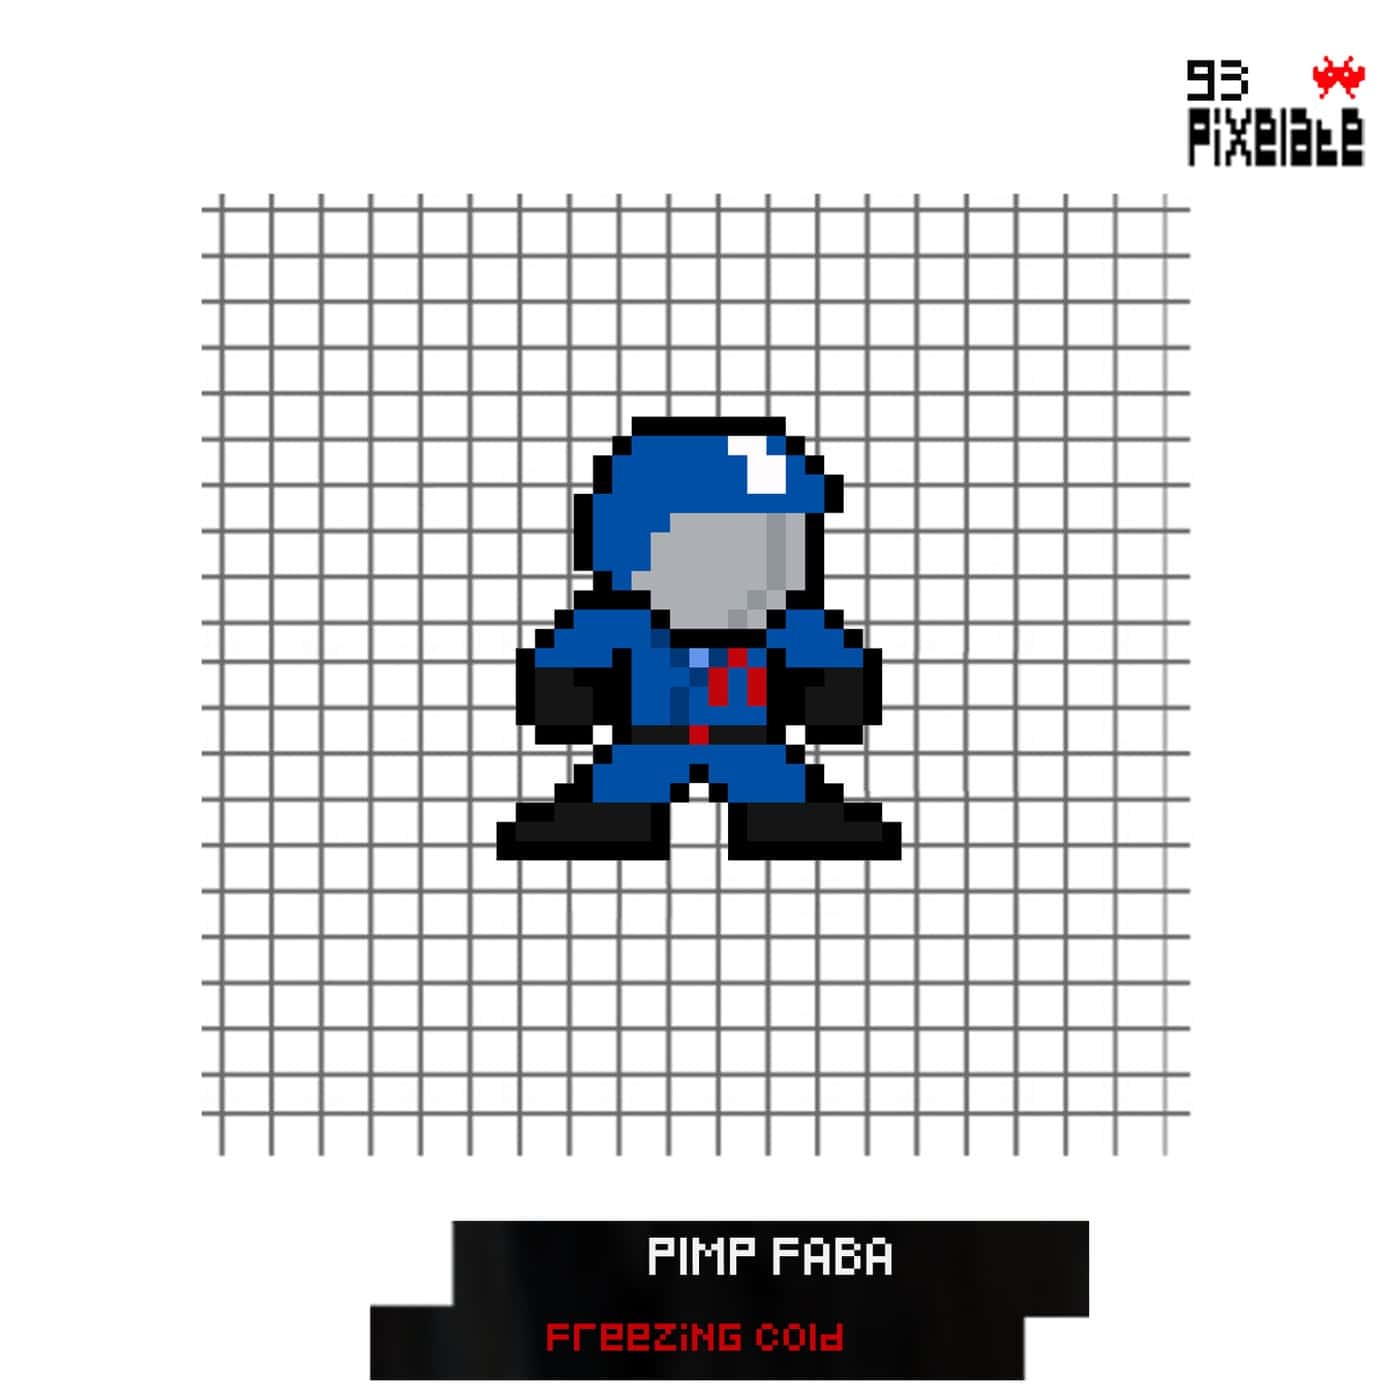 image cover: Pimp Faba - Freezing Cold / PIXELATE93